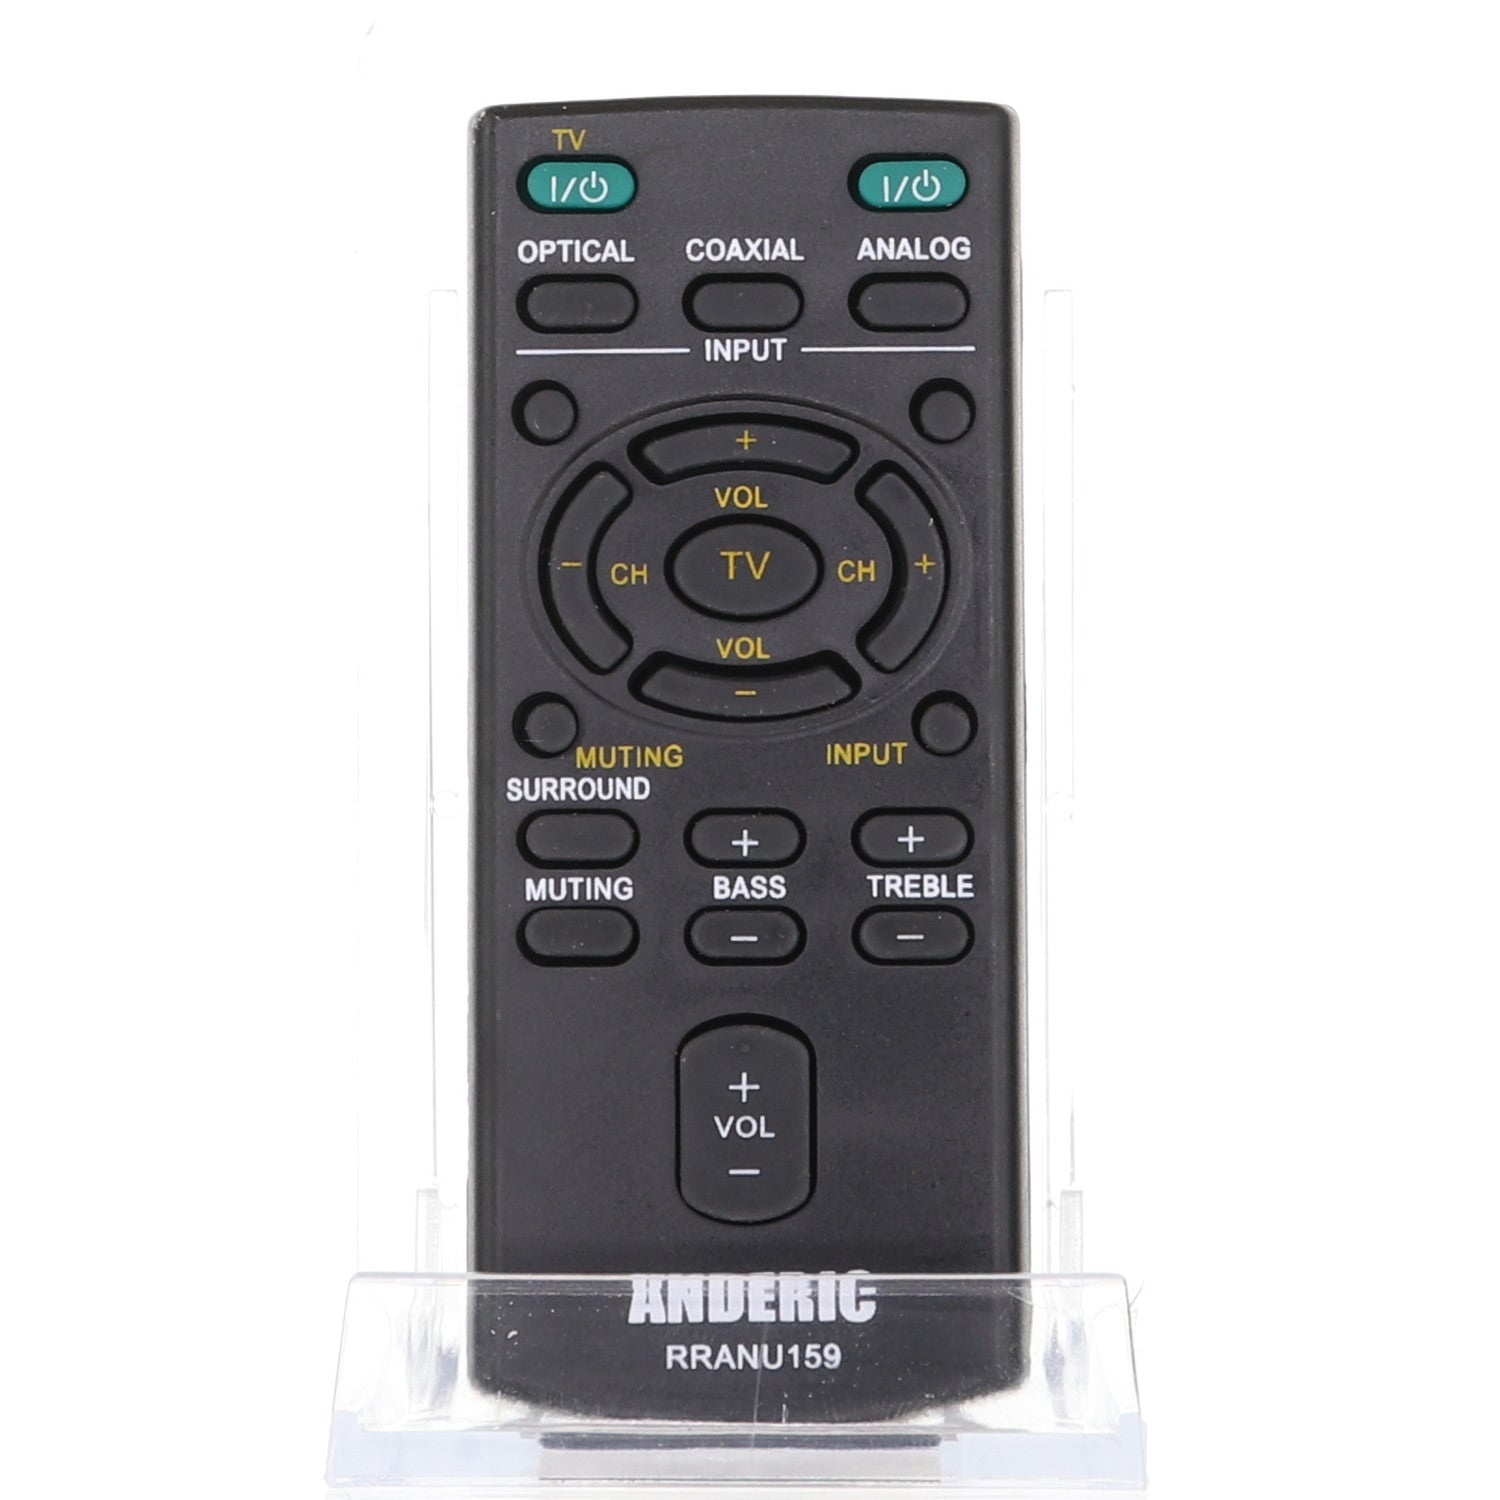 RRANU159 Remote Control for Sony® Sound Bar Systems